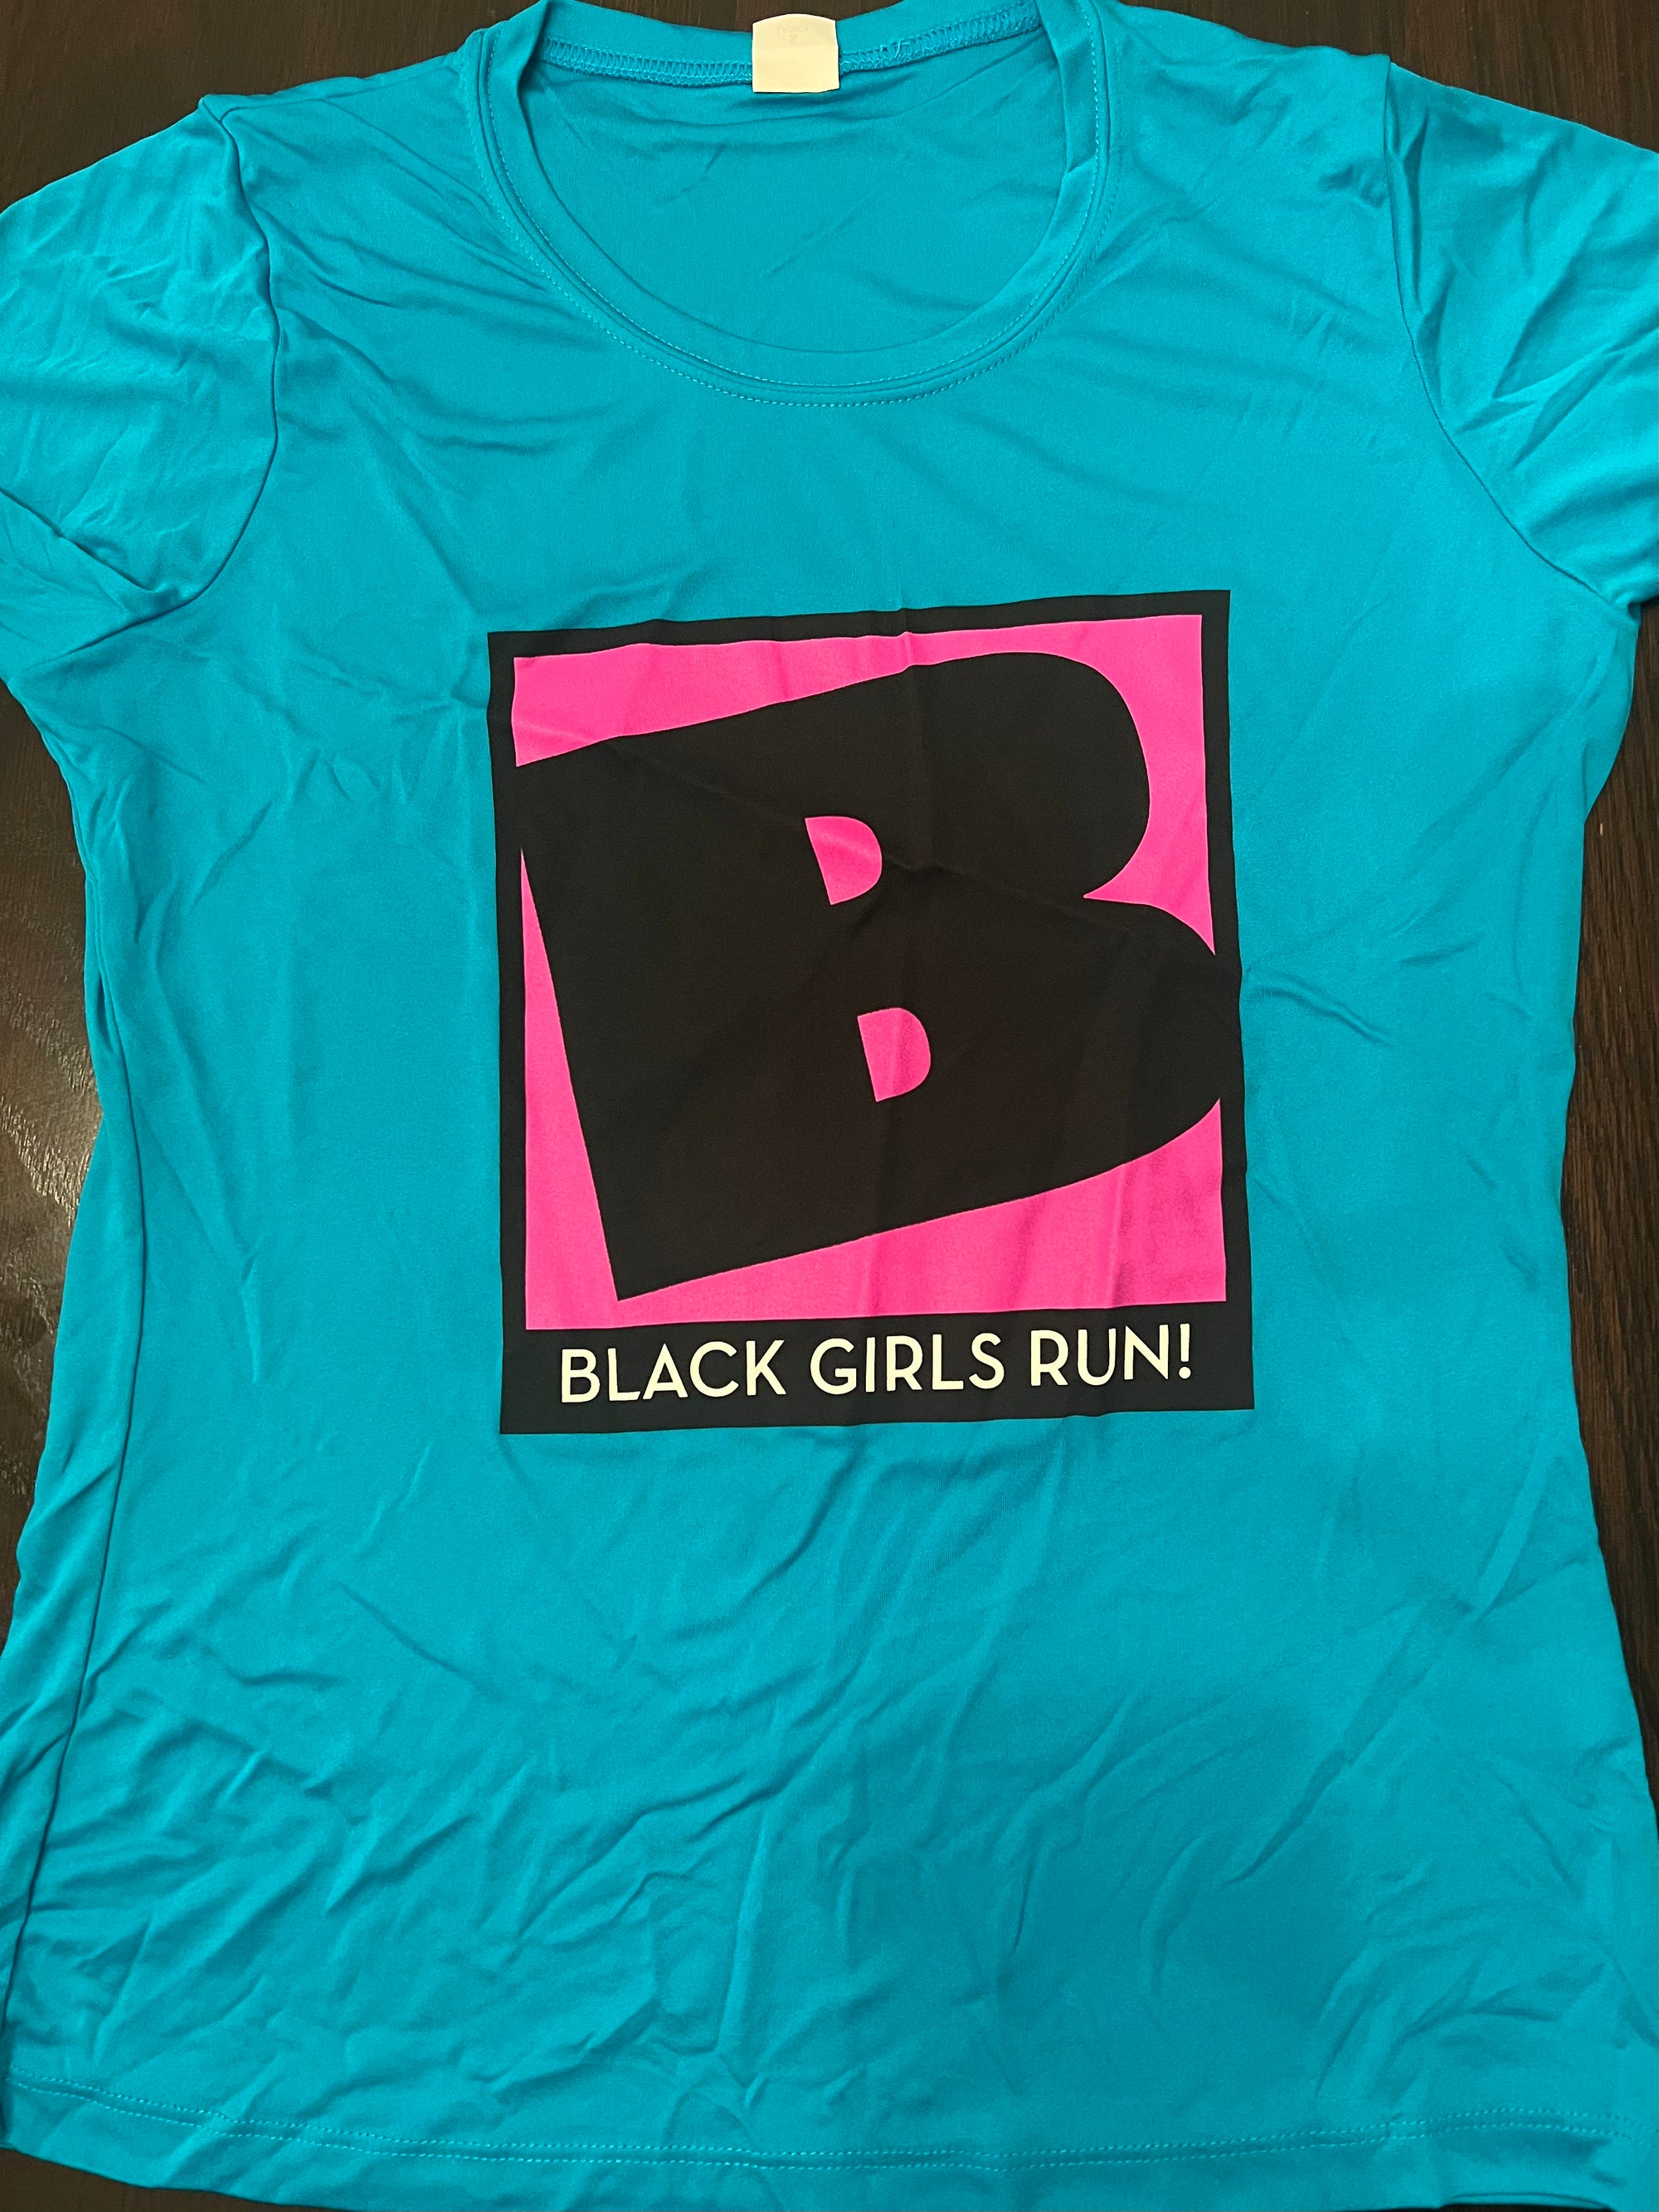 B Black Girls RUN!